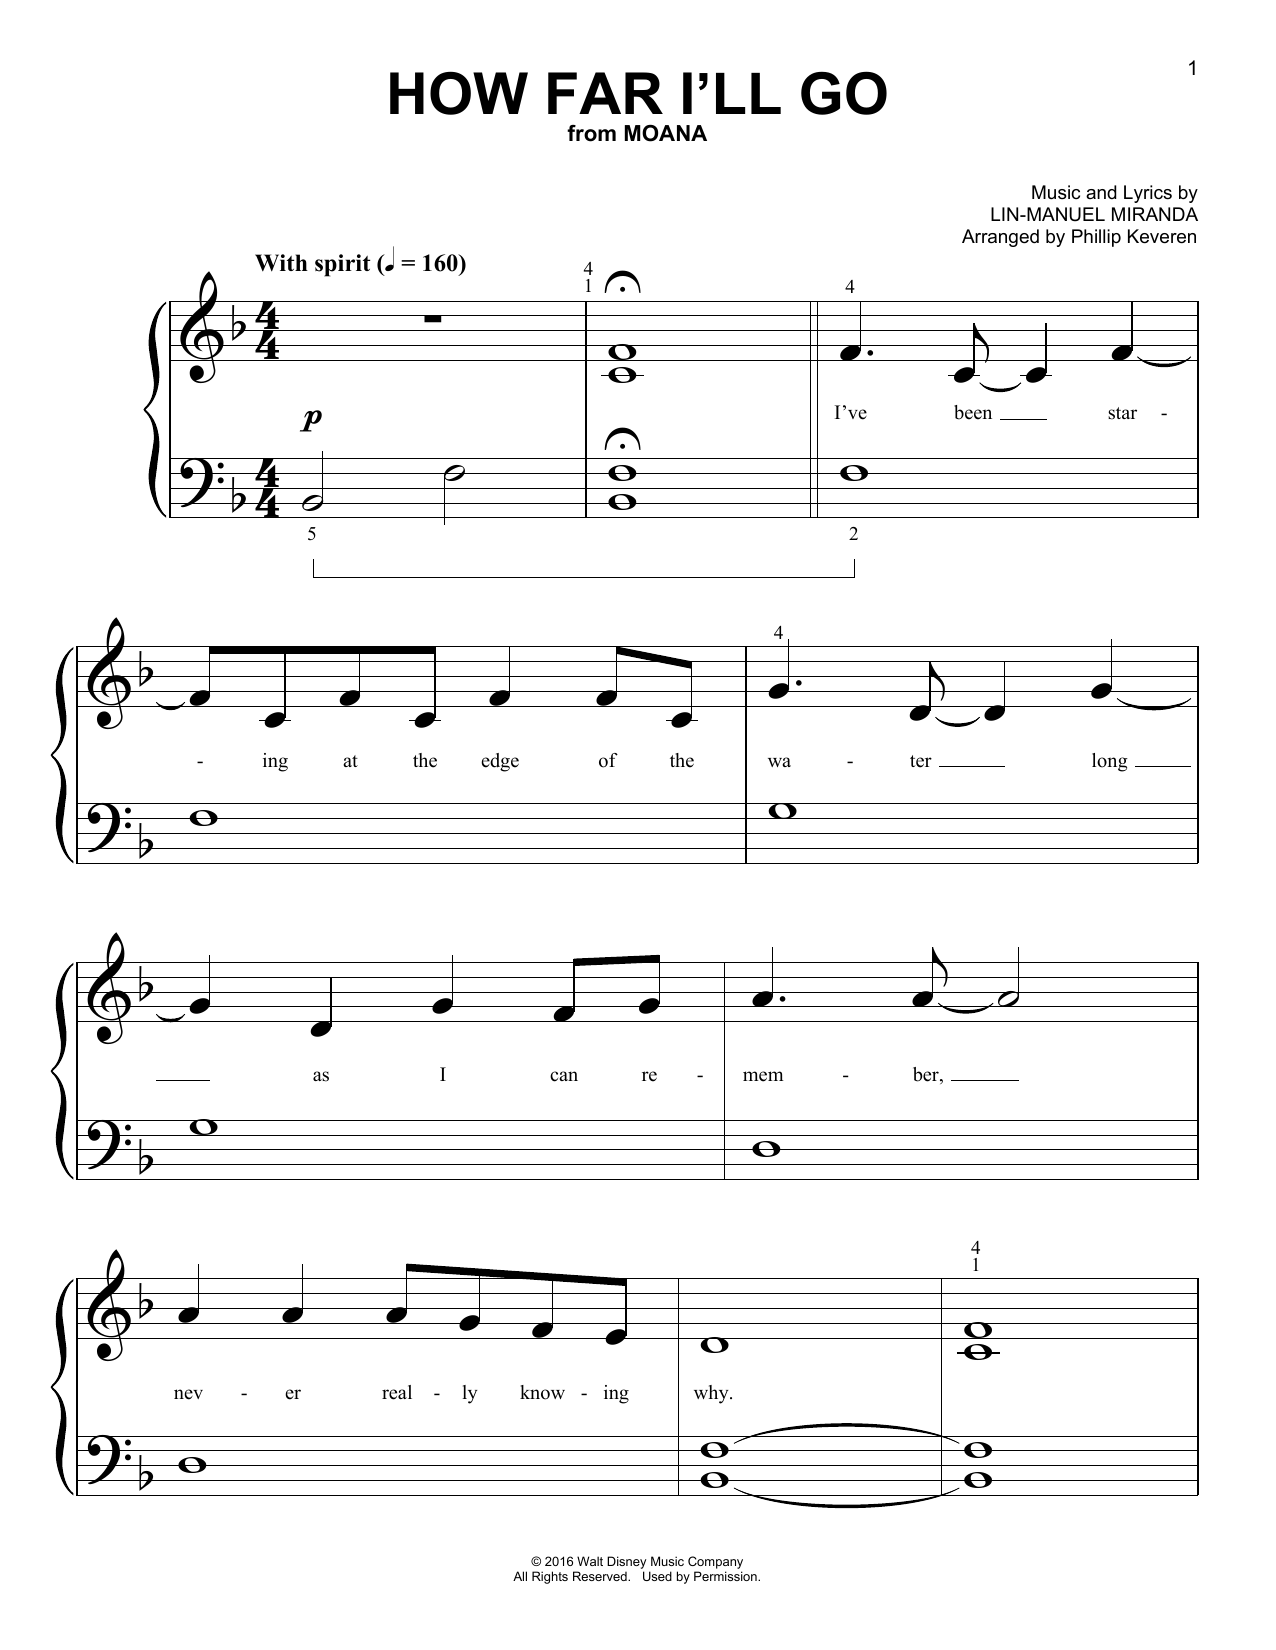 Lin-Manuel Miranda How Far I'll Go (from Moana) (arr. Phillip Keveren) Sheet Music Notes & Chords for Piano (Big Notes) - Download or Print PDF